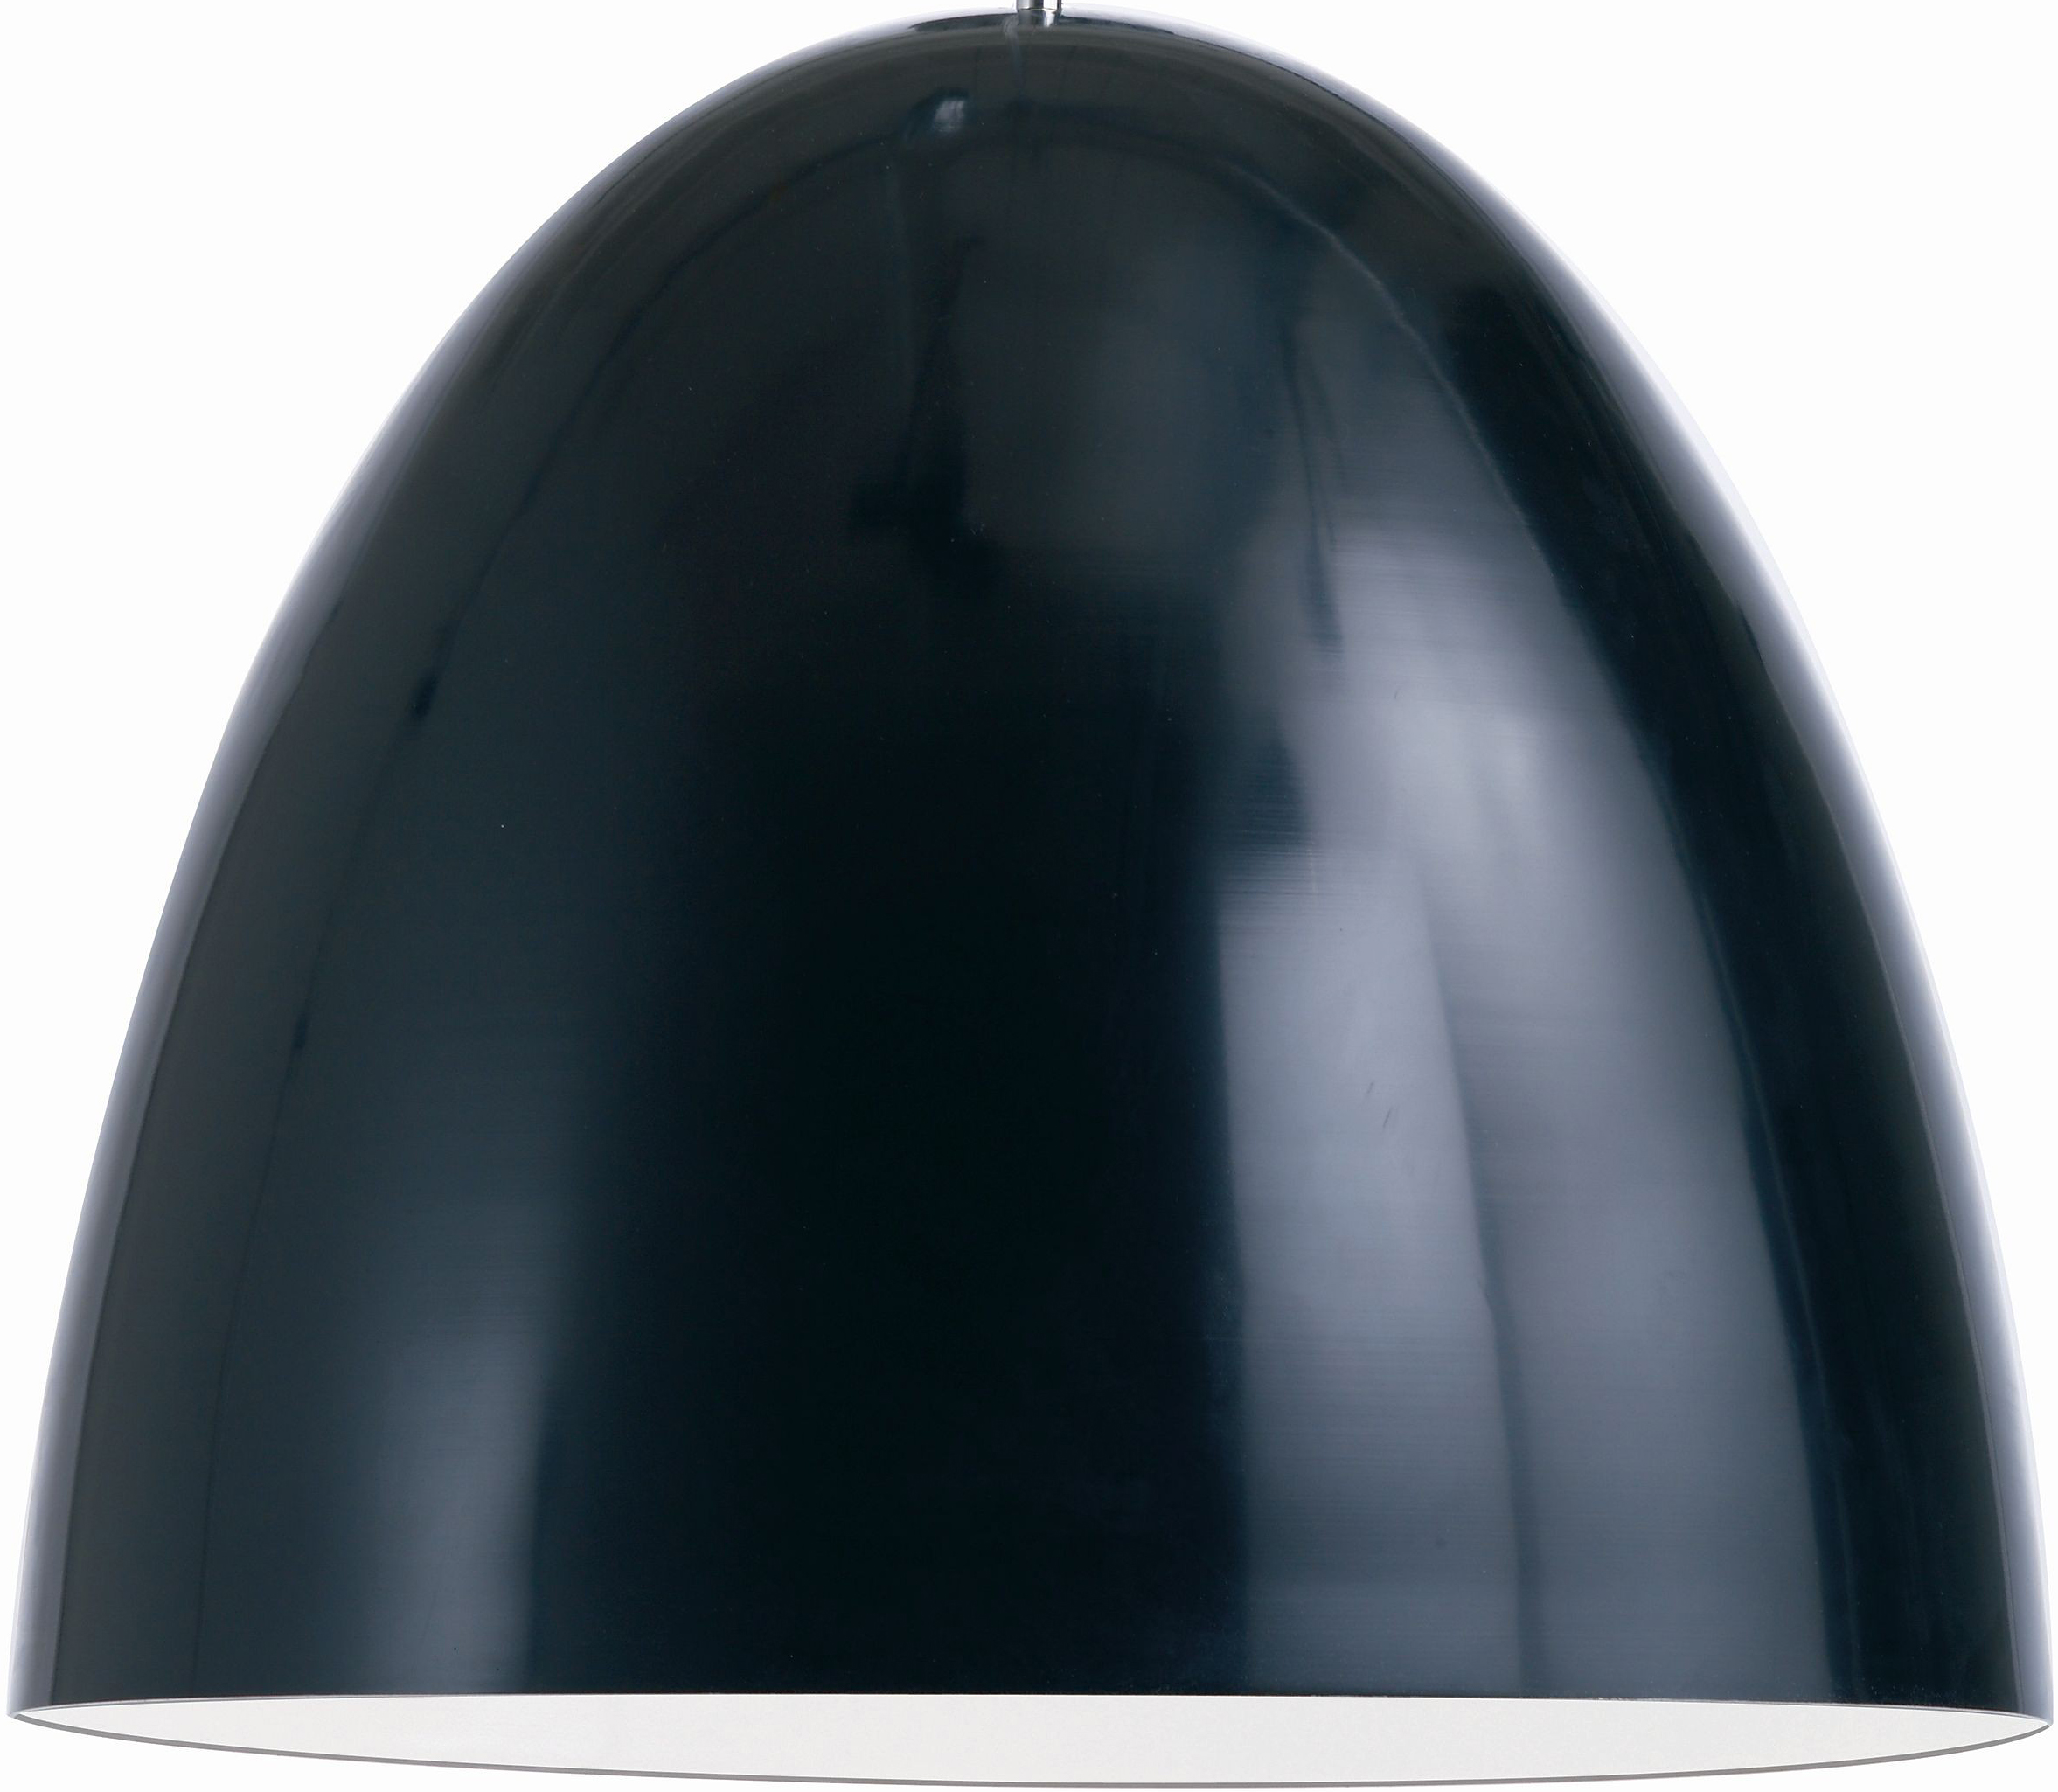 the dome pendant light in black